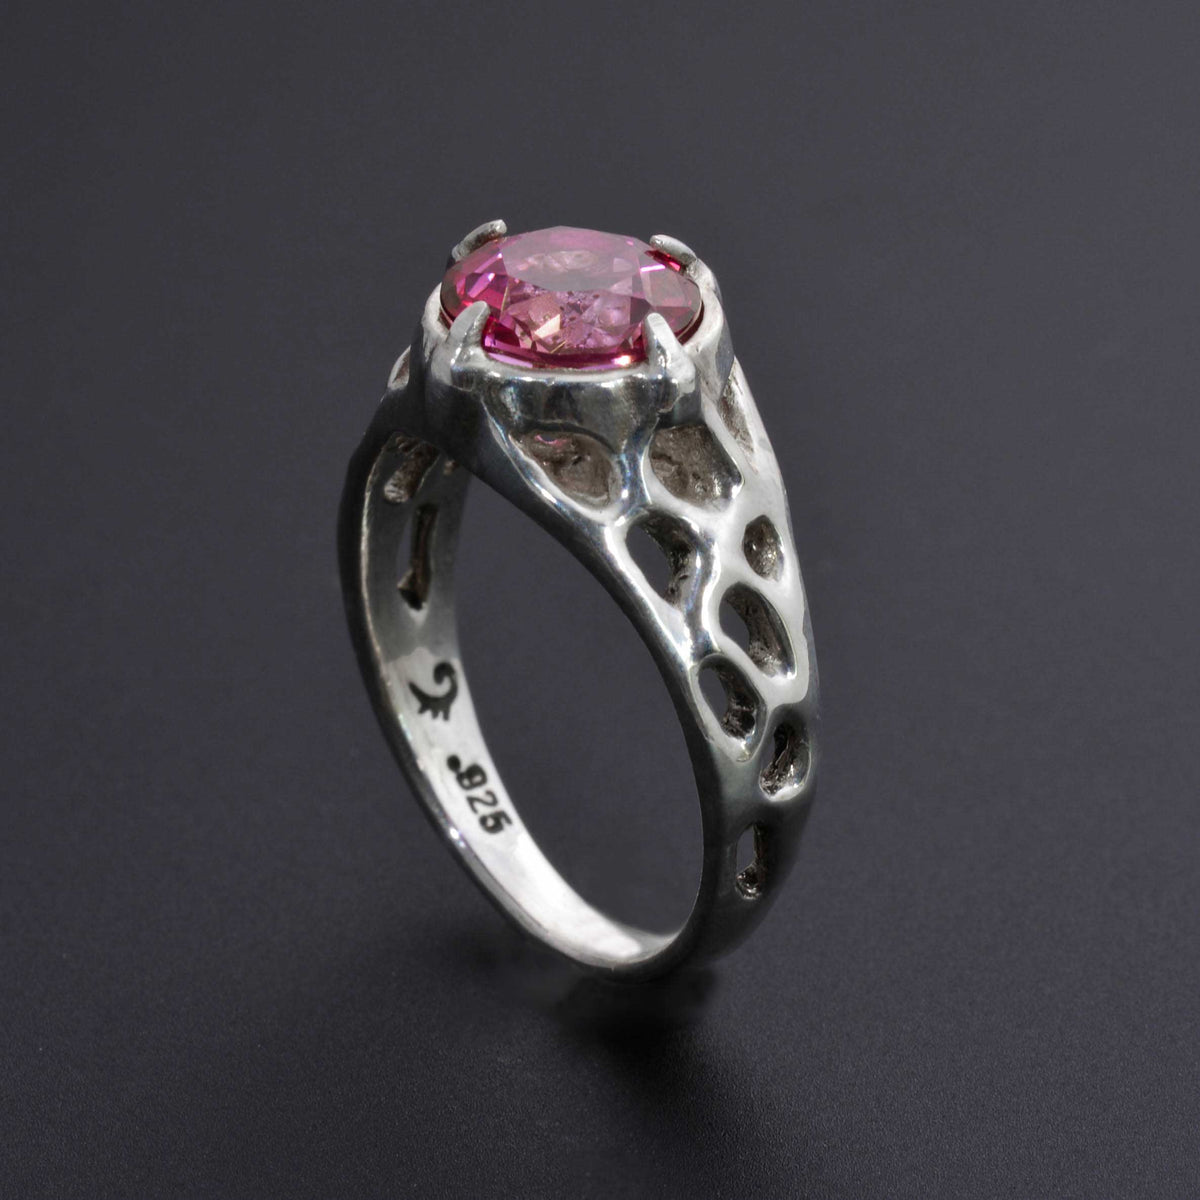 Make a Statement with an Art Nouveau Sculpture Ring Featuring a Round Pink Topaz